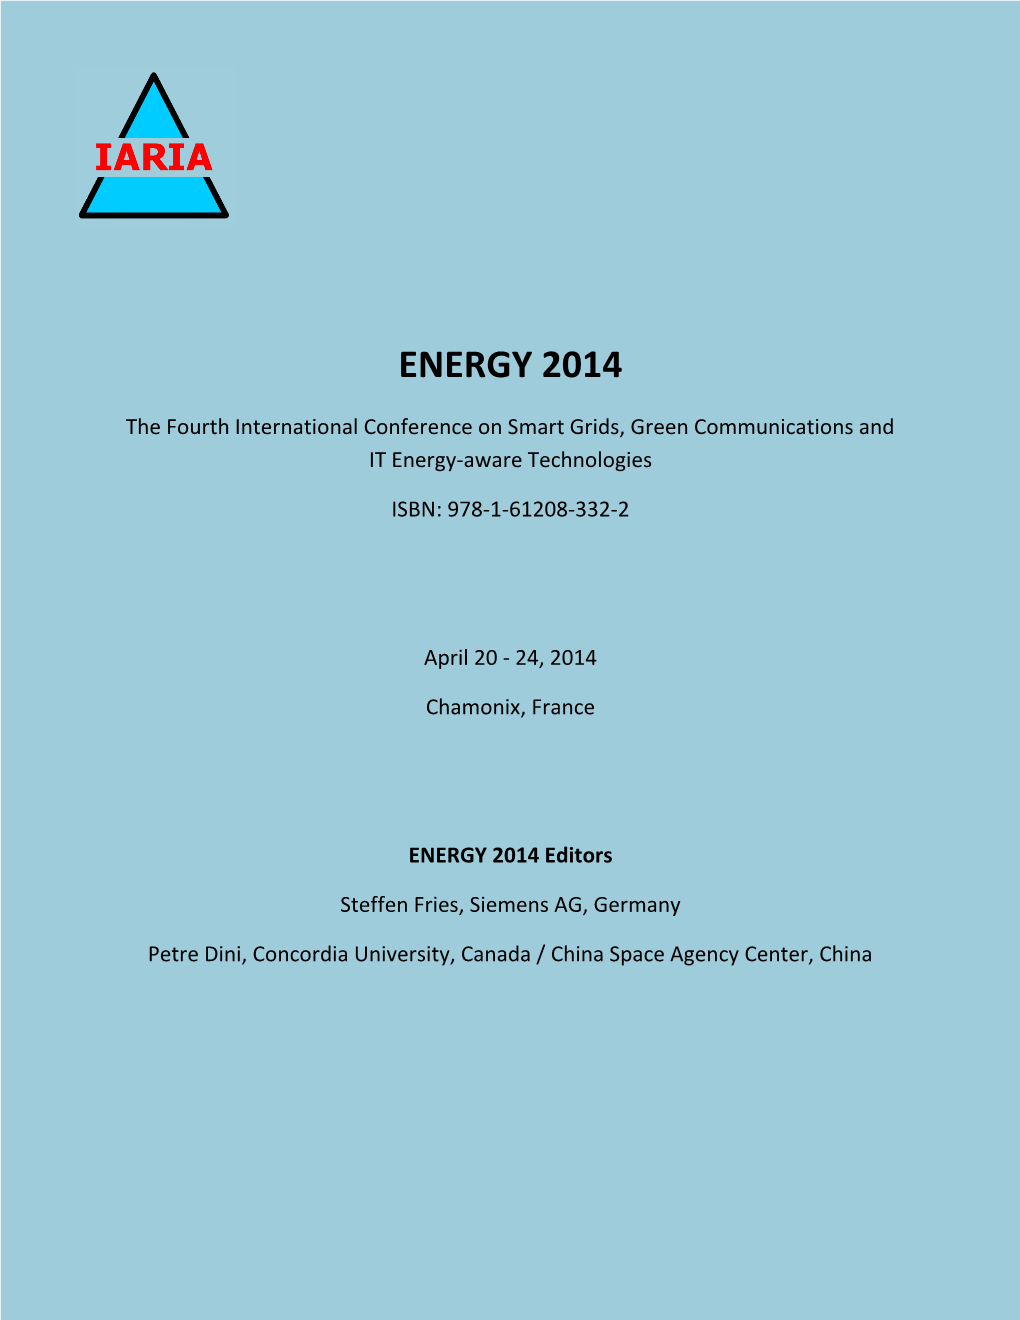 ENERGY 2014 Proceedings